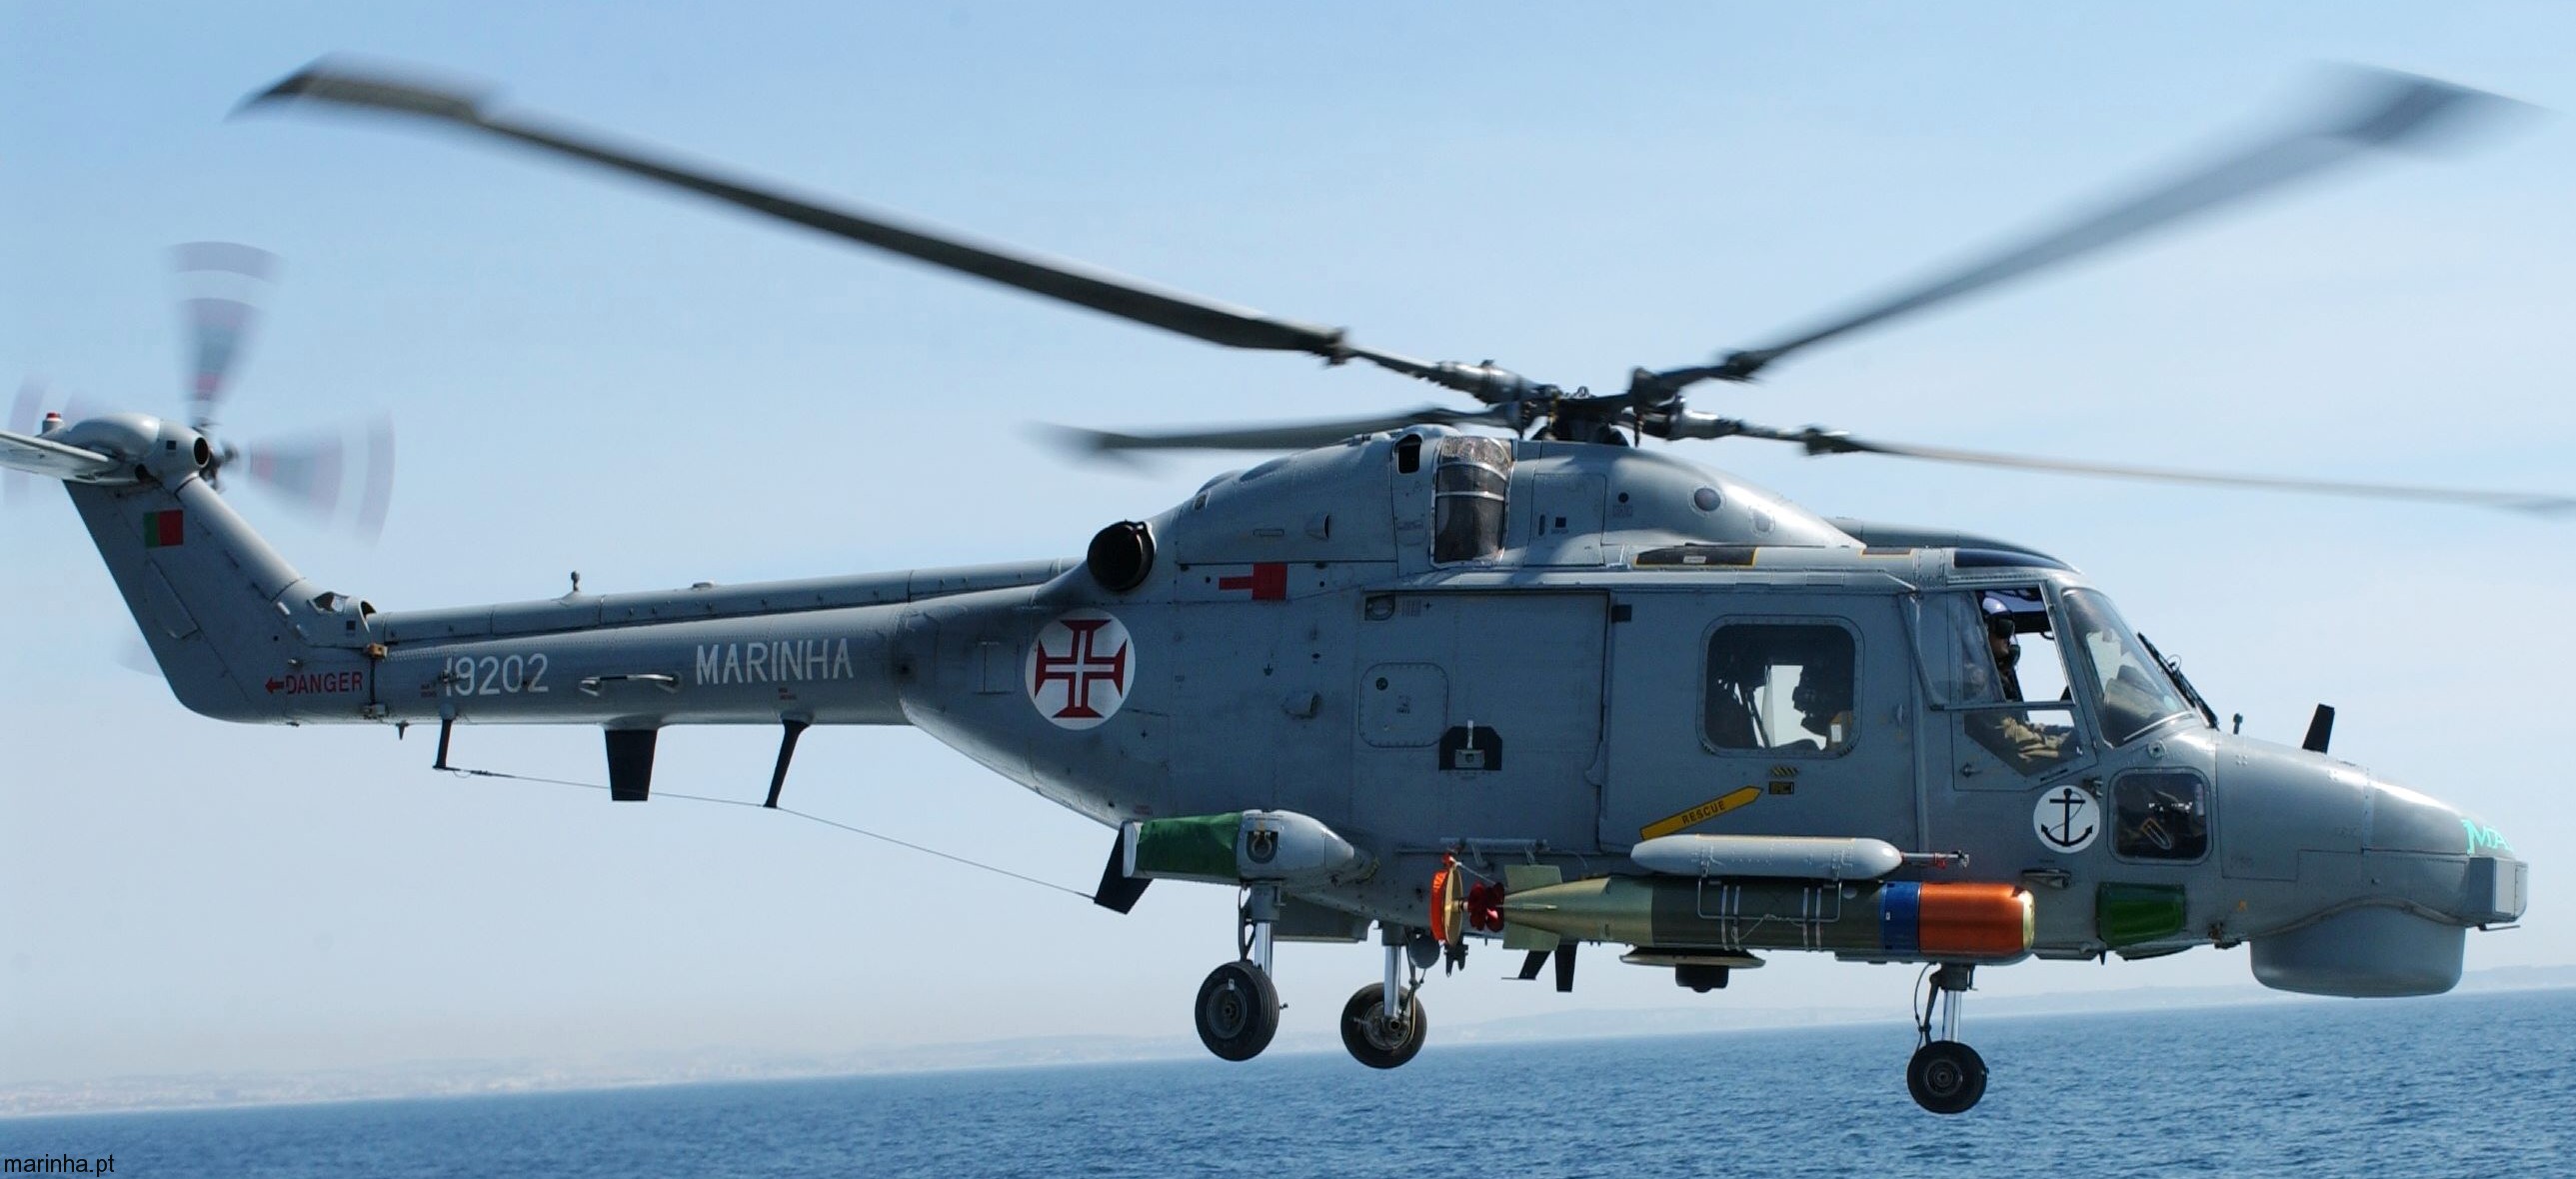 westland super lynx mk.95a naval helicopter portuguese navy marinha 20